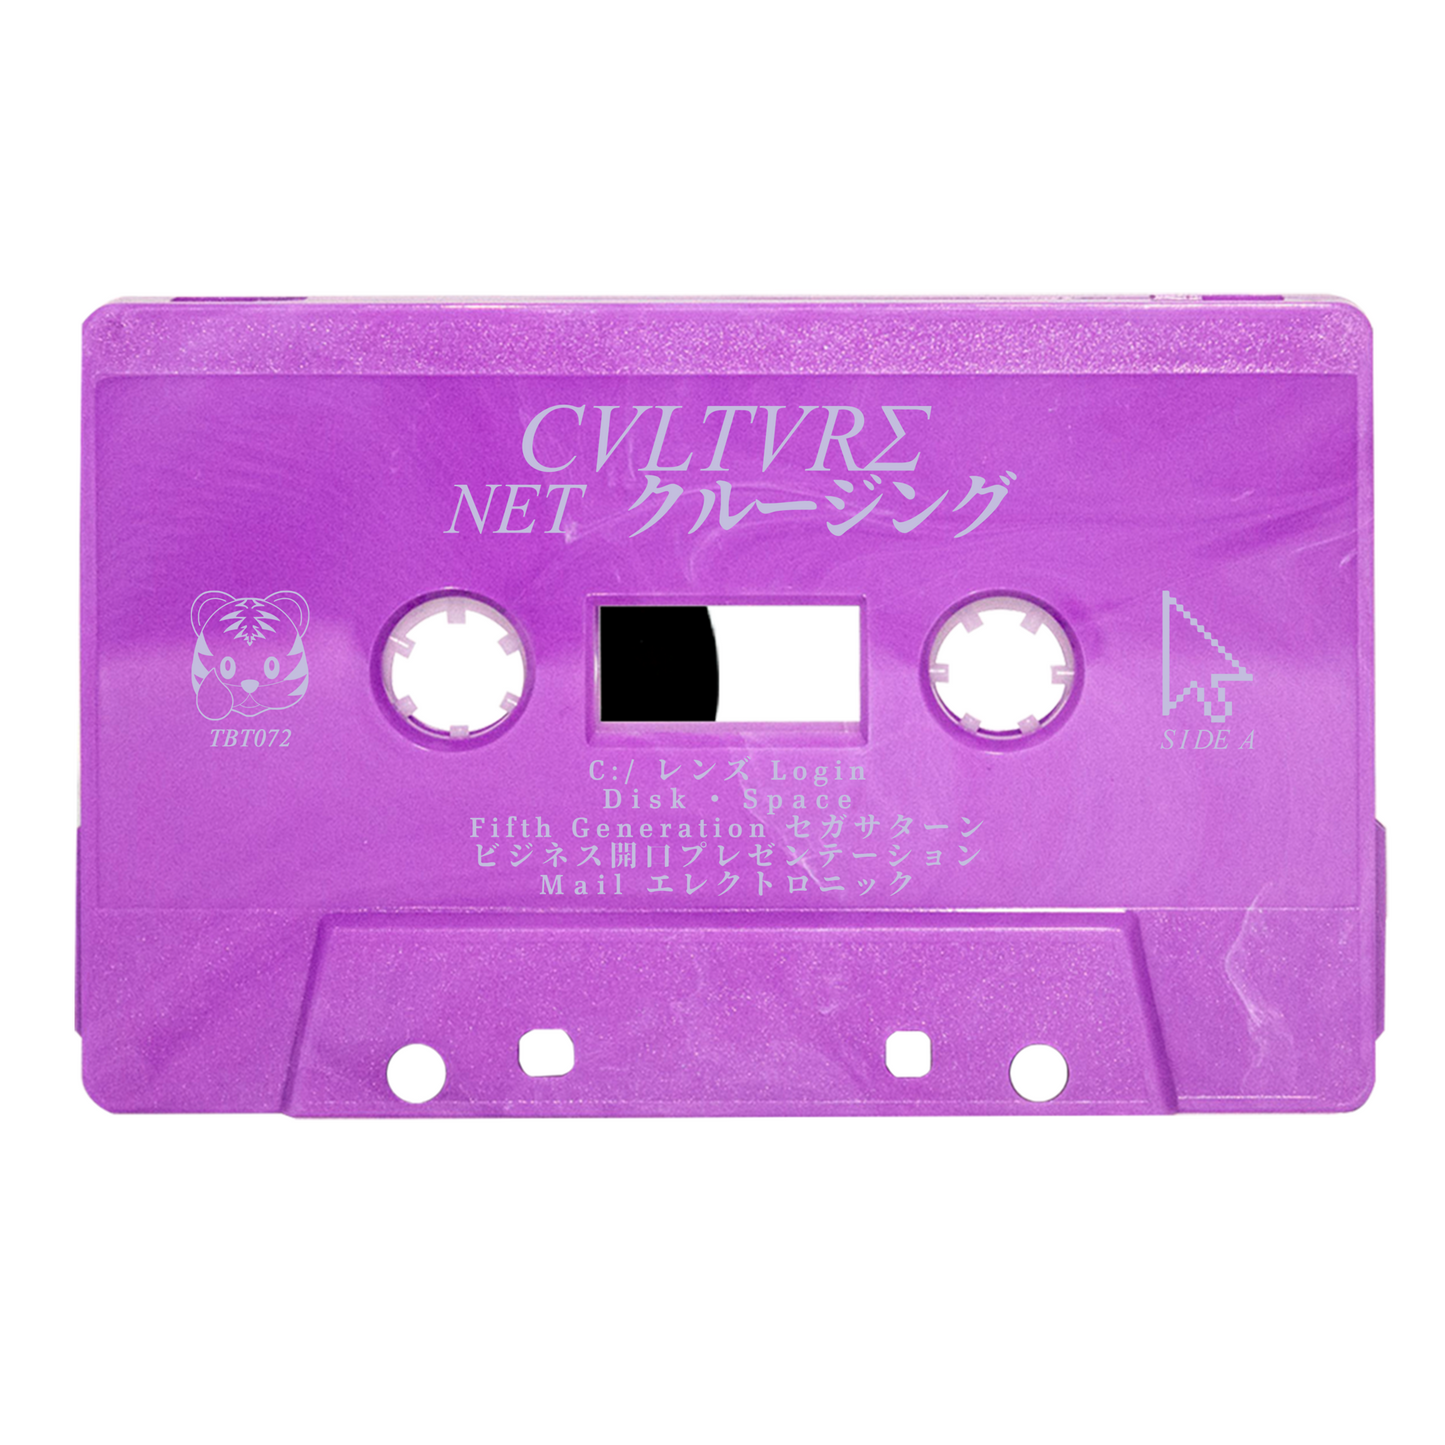 CVLTVRΣ - "NETクルージング" Limited Edition Cassette Tape